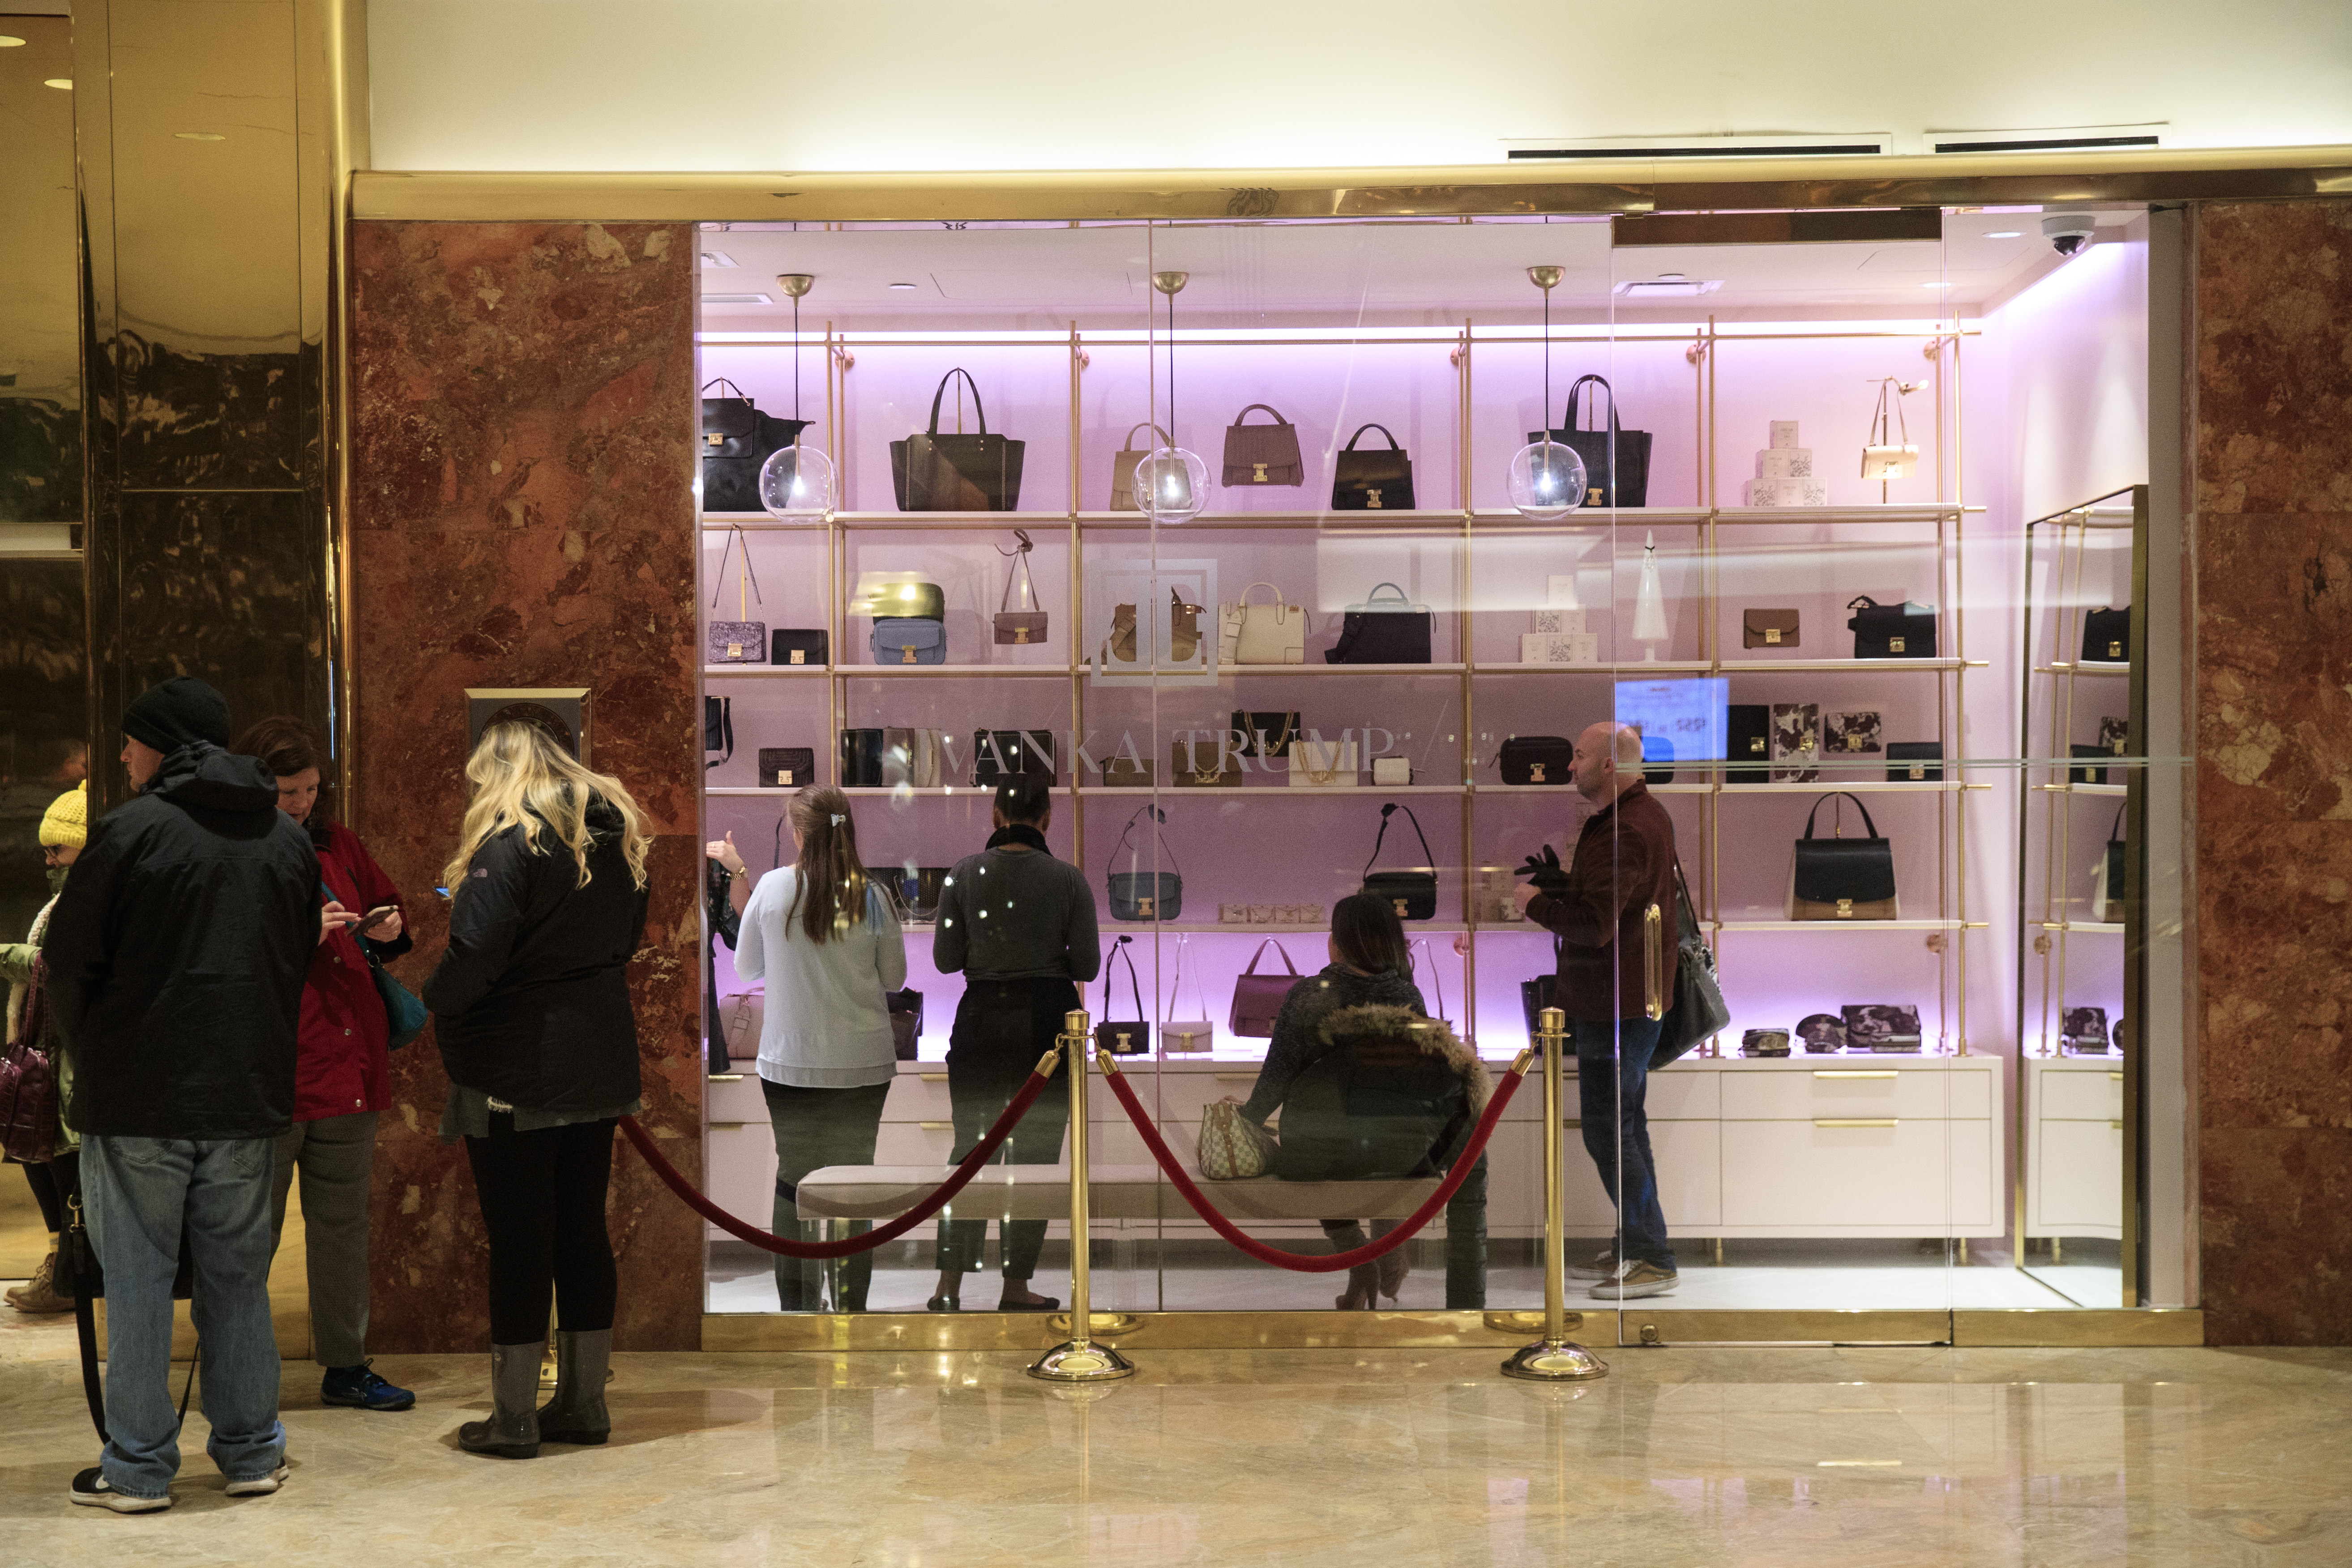 The Ivanka Trump brand boutique in Trump Tower